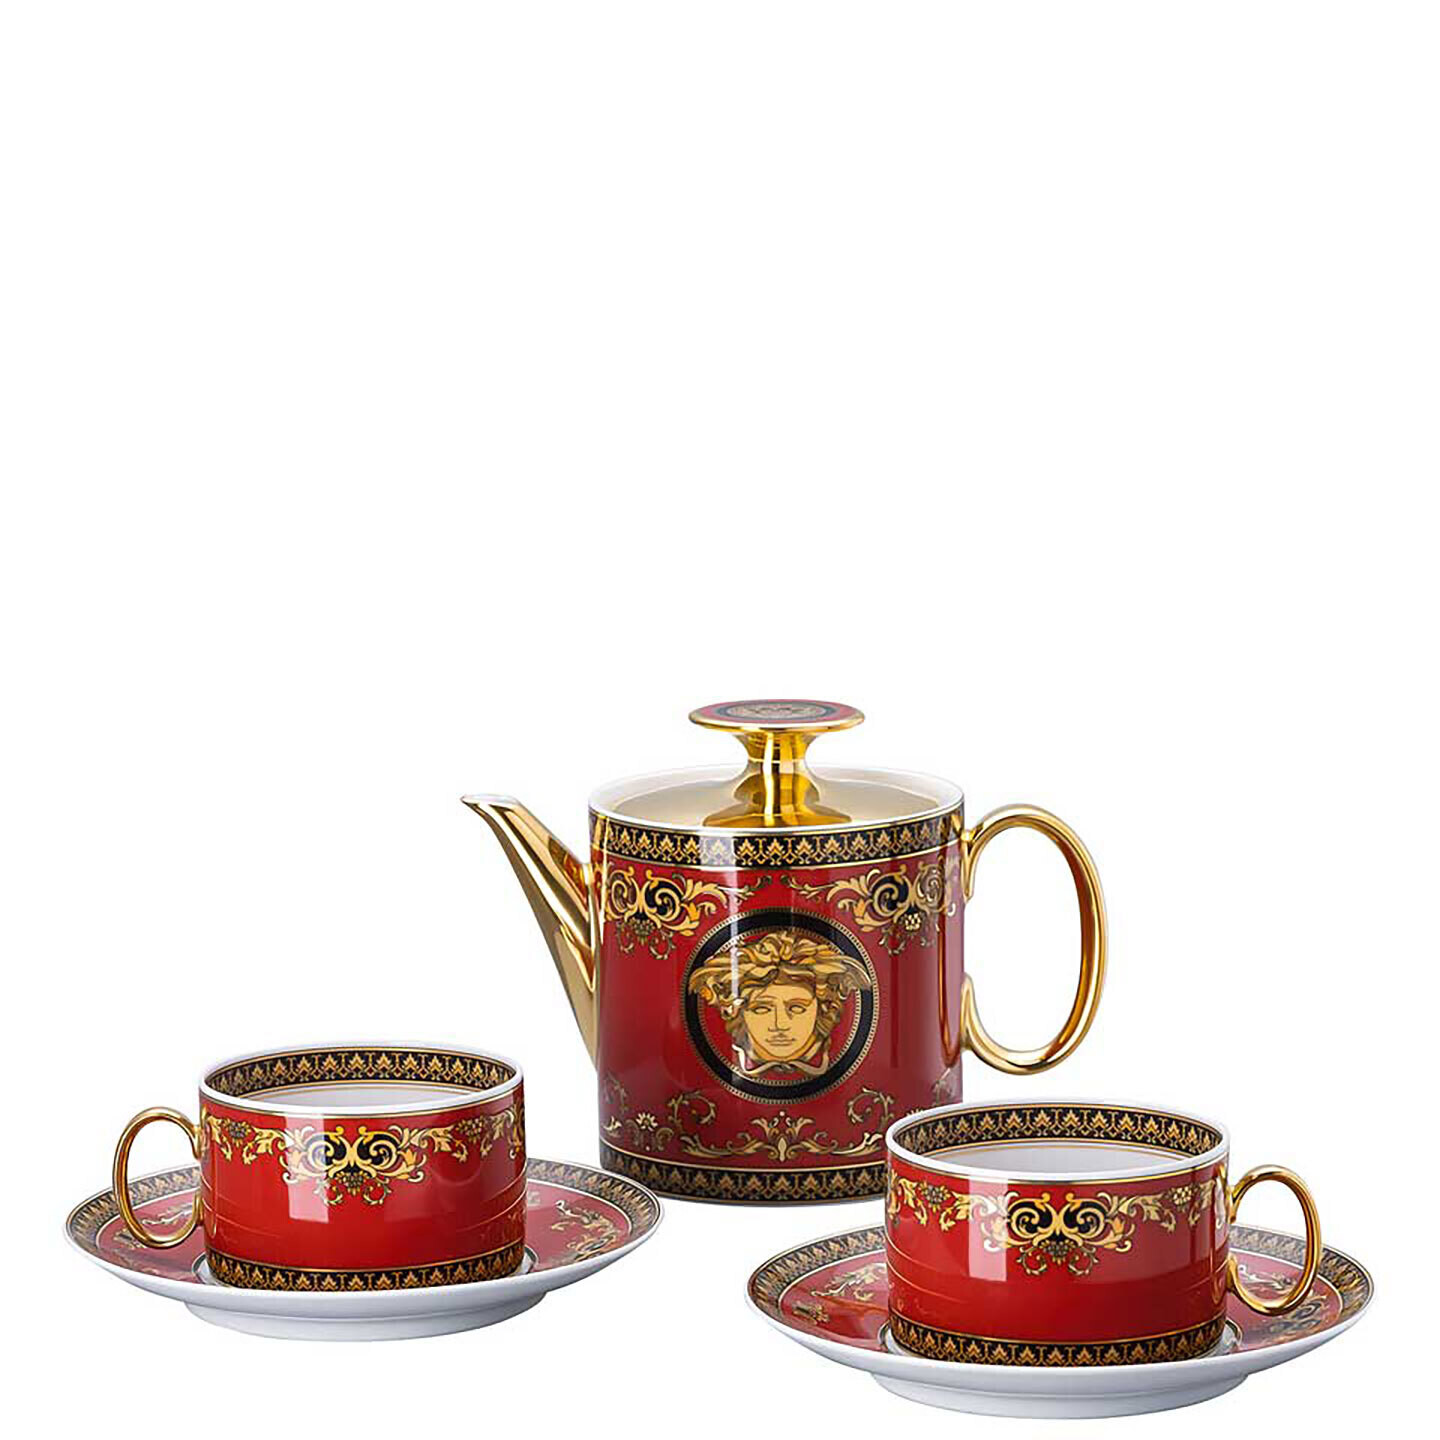 Versace Medusa Red Modern Tea Set for Two Incl. Tea Pot & 2 Tea Cups Saucers 19335-409605-28717